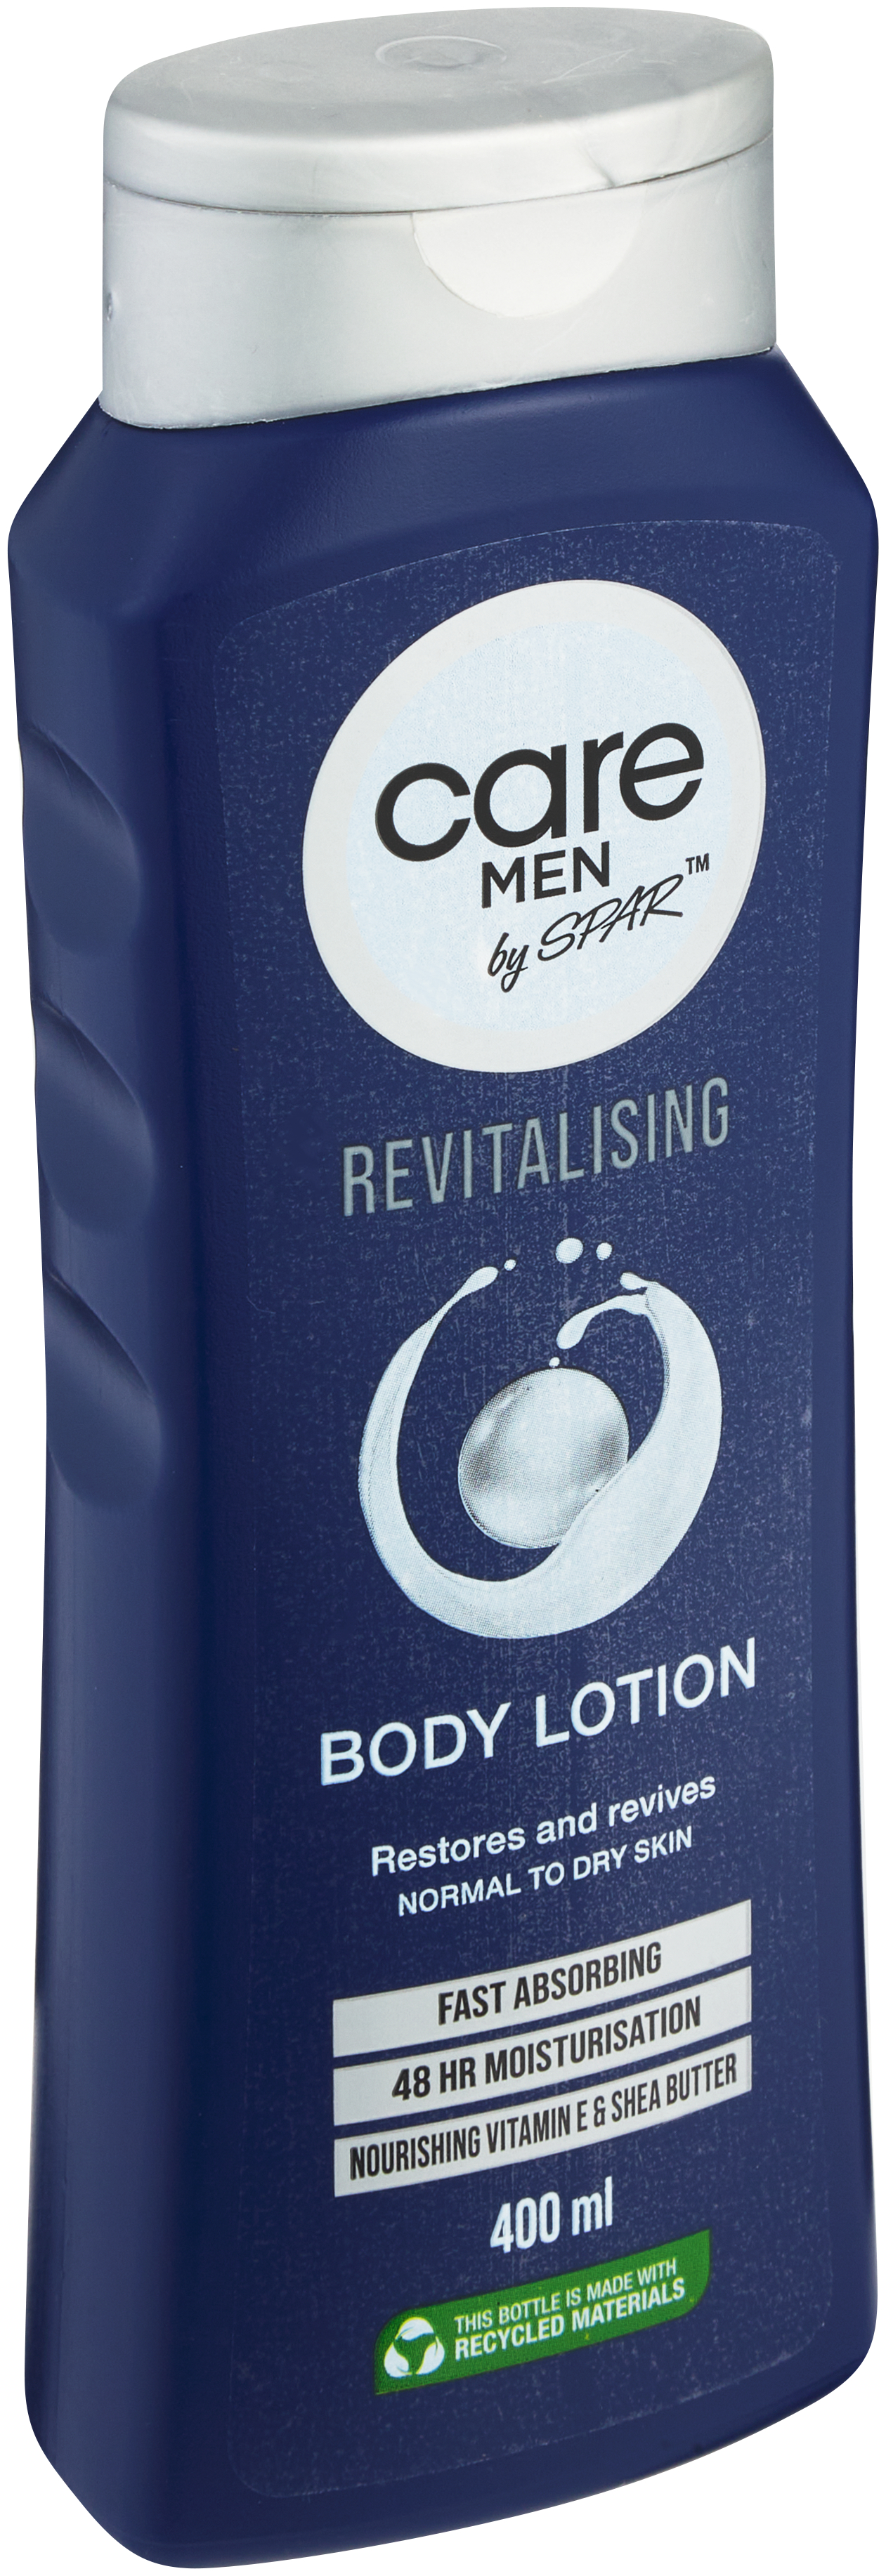 care by spar men lotion revitalising